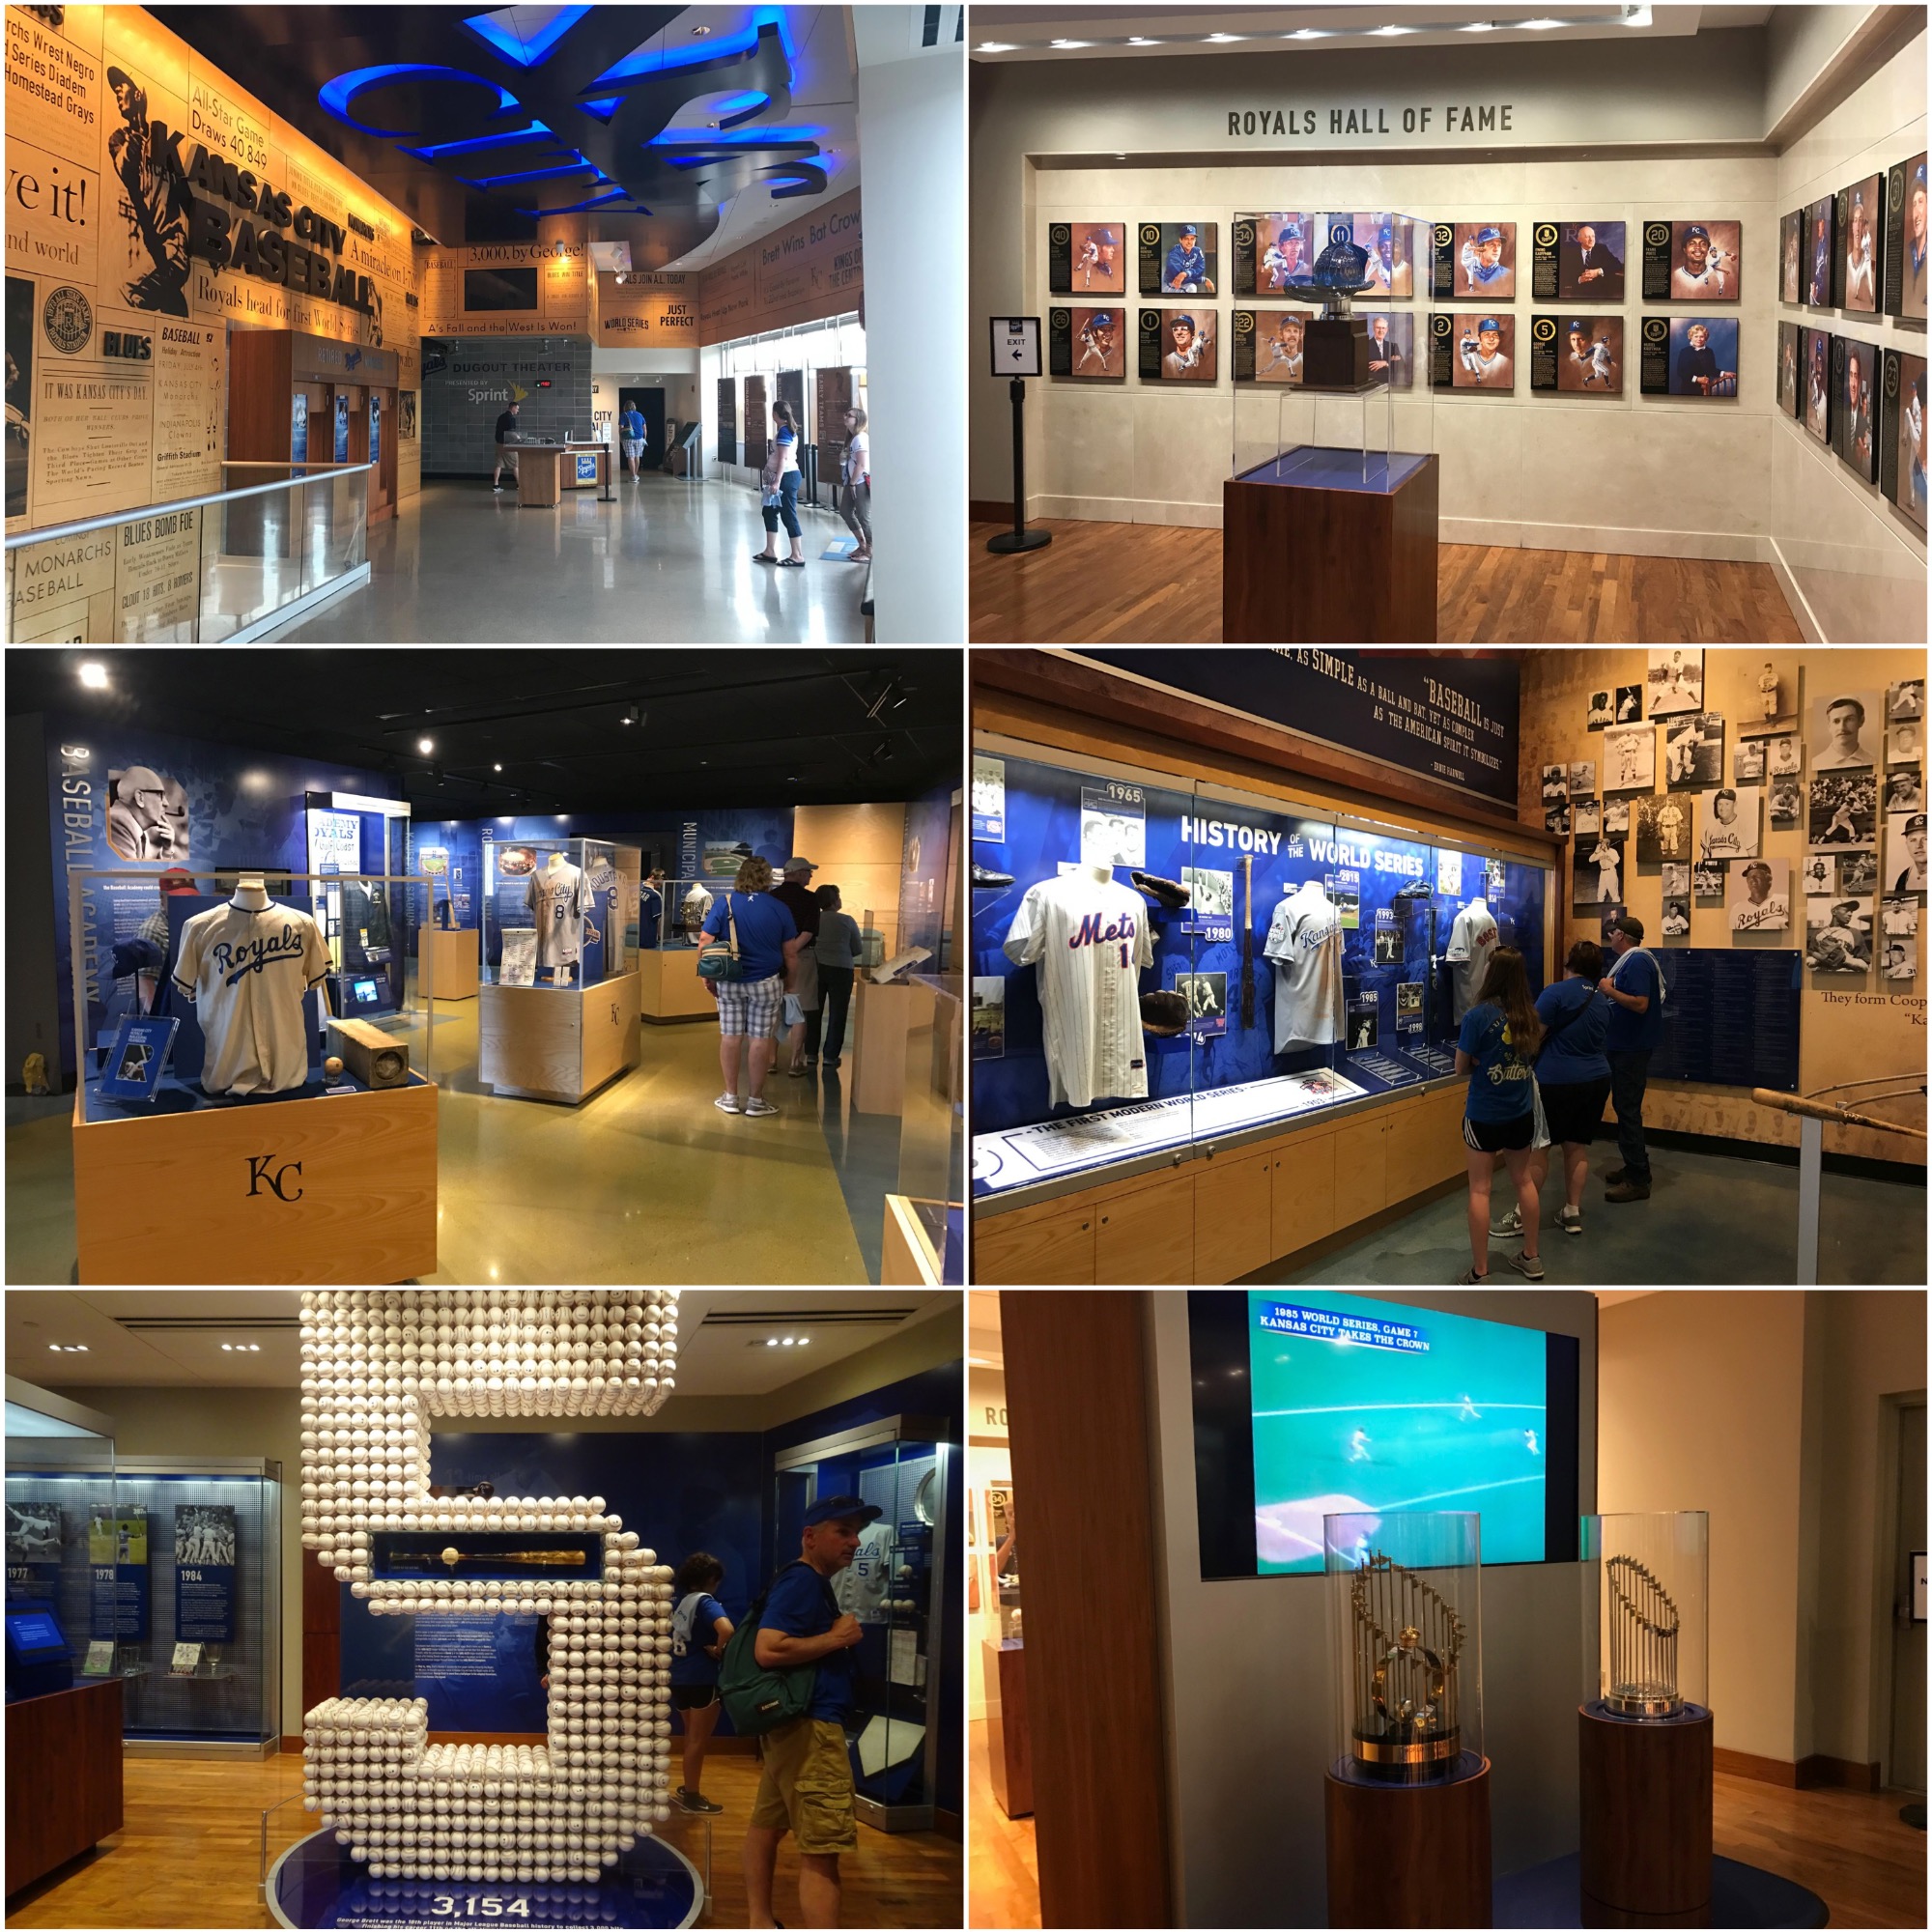 Kauffman Stadium Royals Hall of Fame and Museum